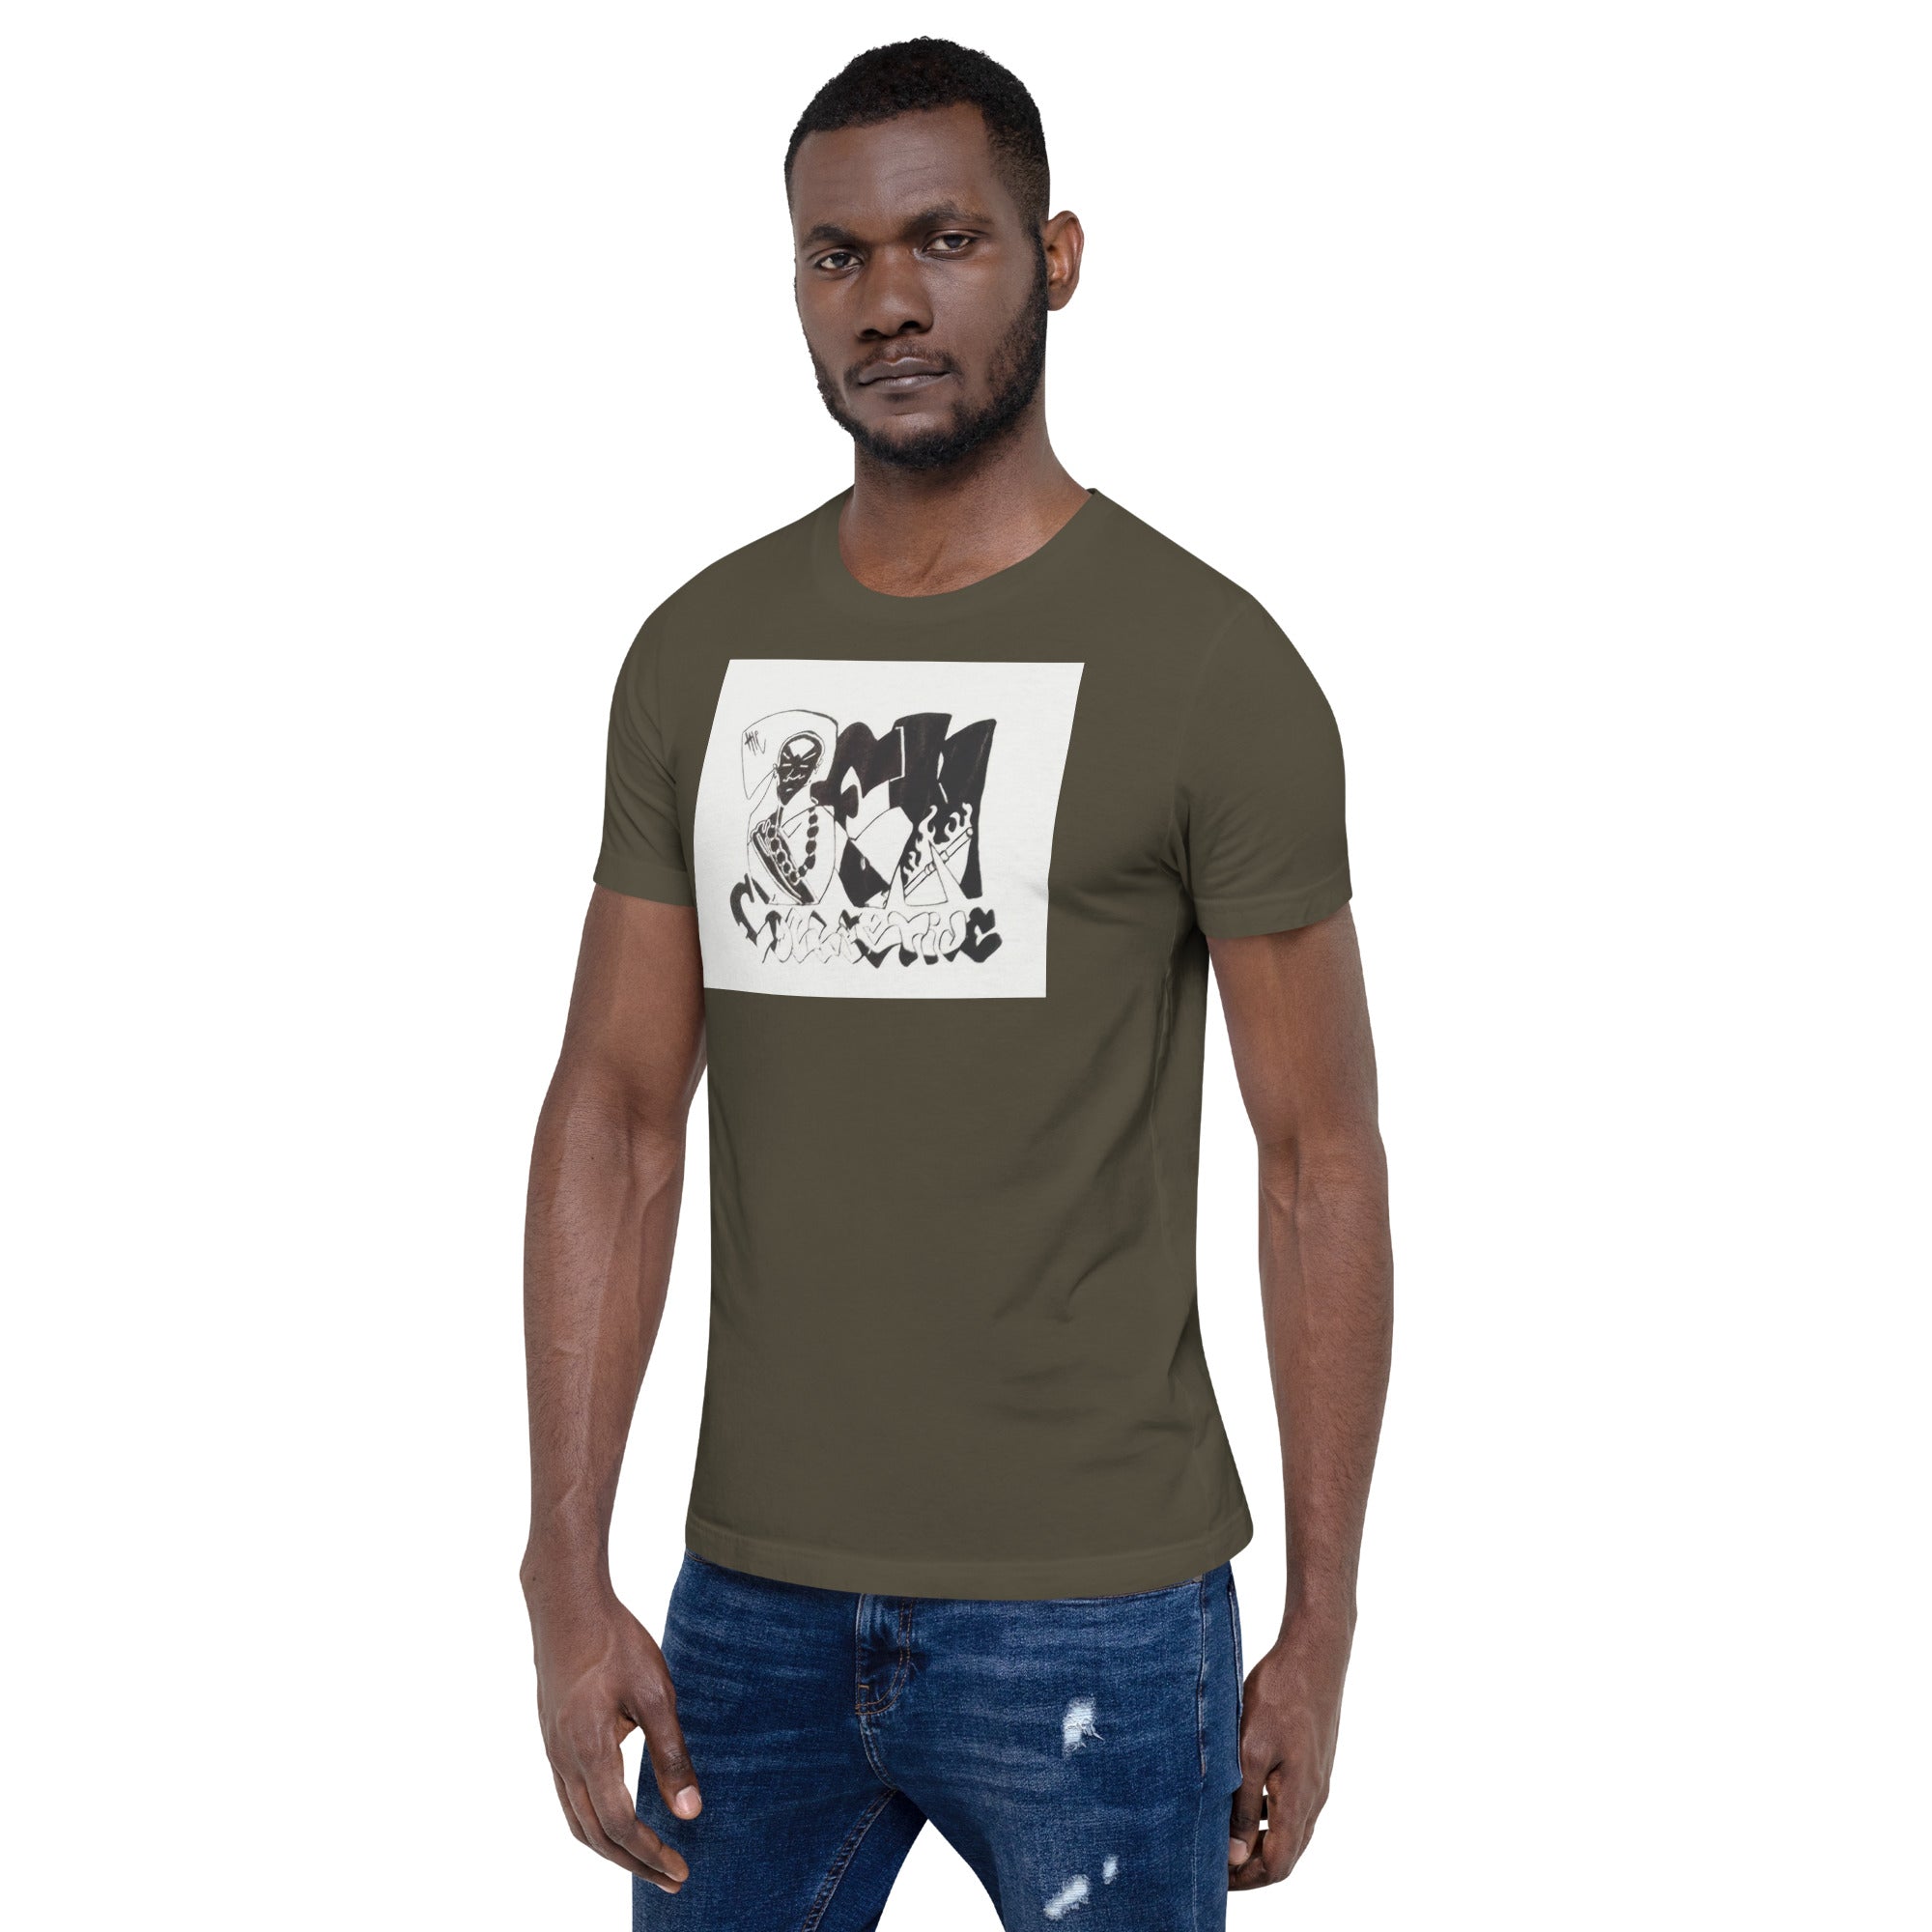 The Zen Collective Unisex T-Shirt